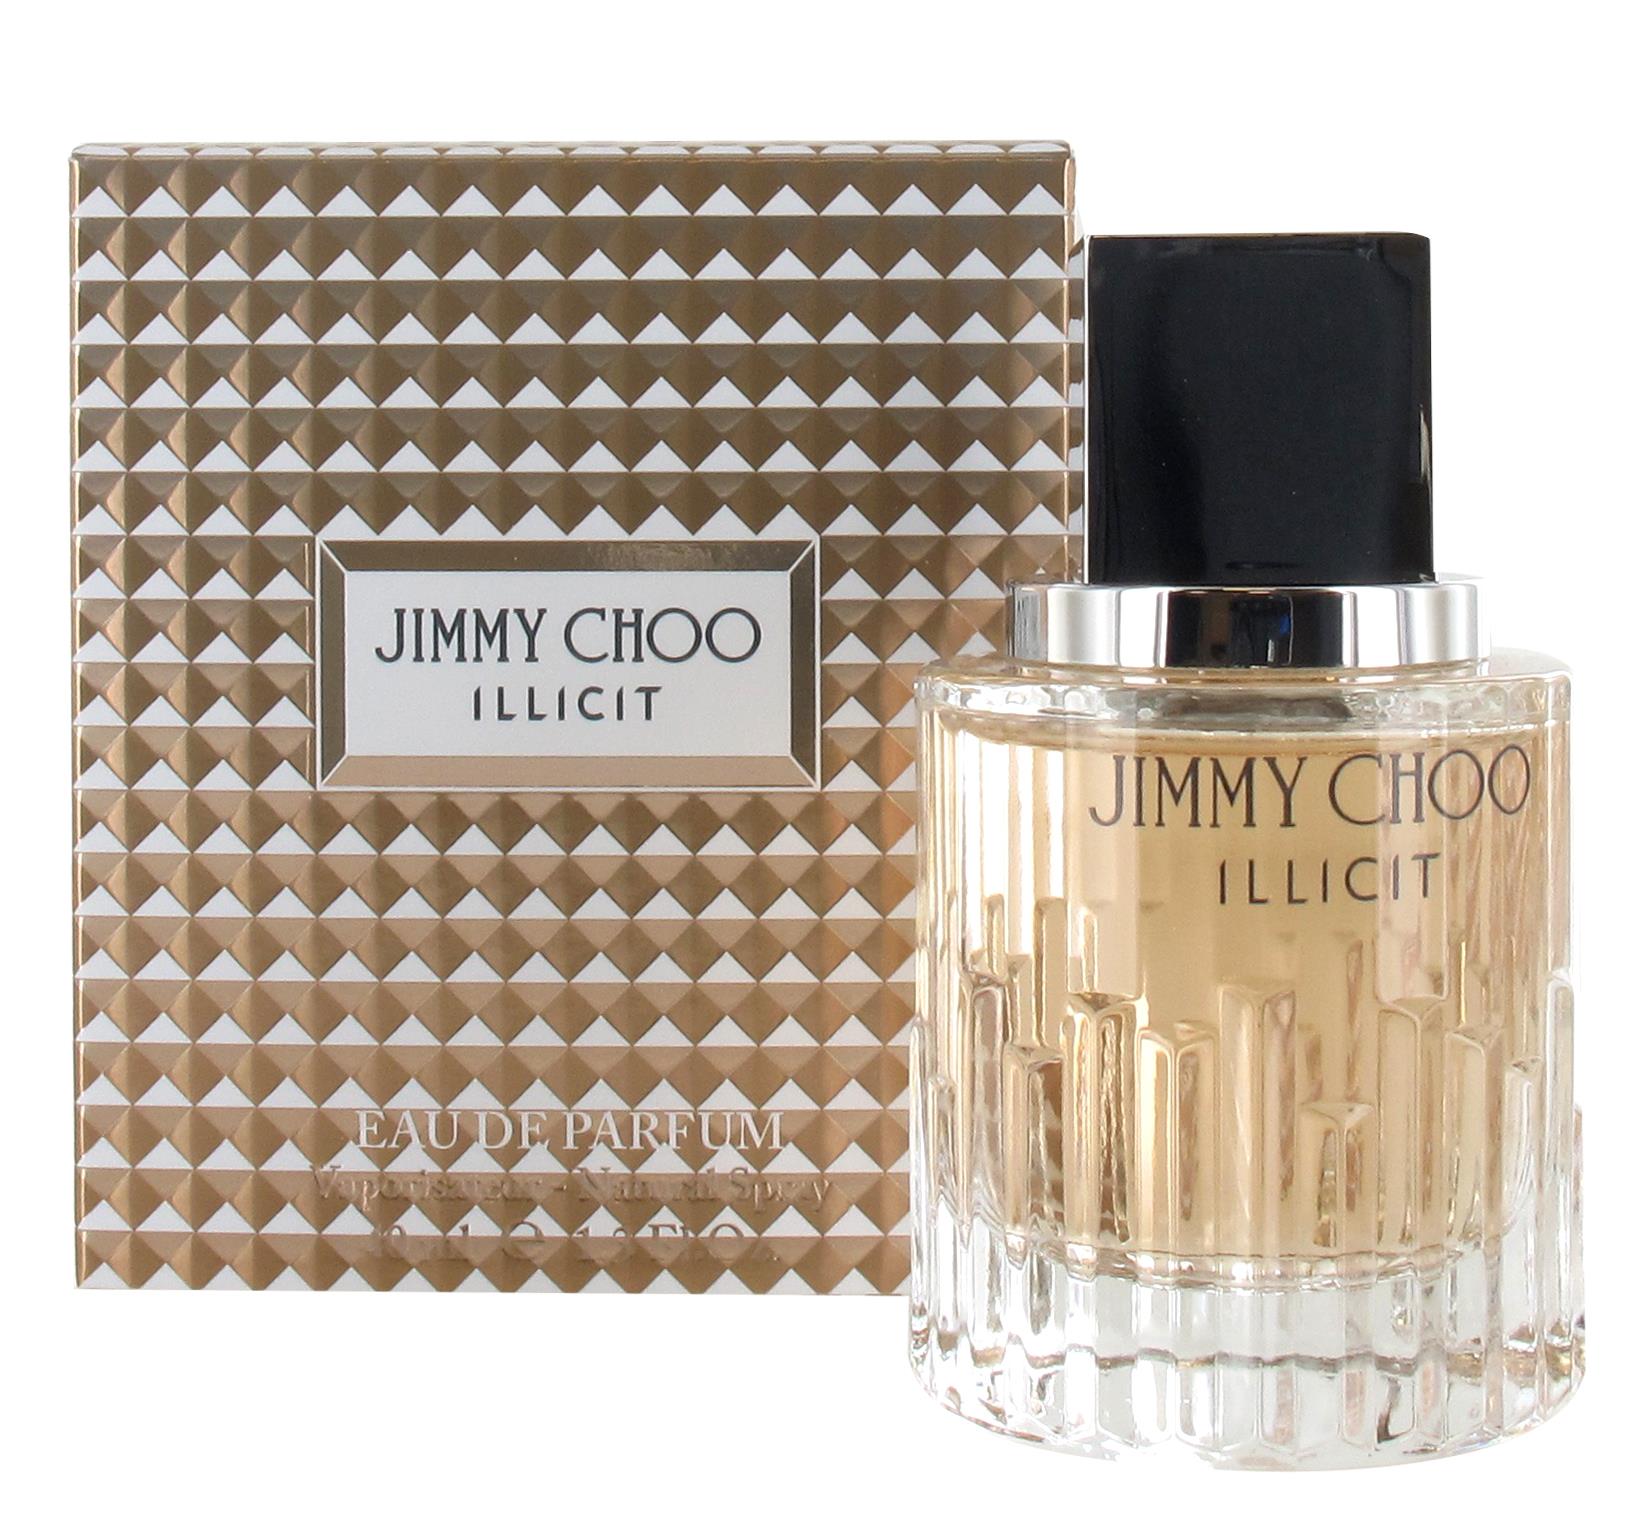 Jimmy Choo Illicit 40ml Eau de Parfum Spray for Her from Perfume Plus Direct